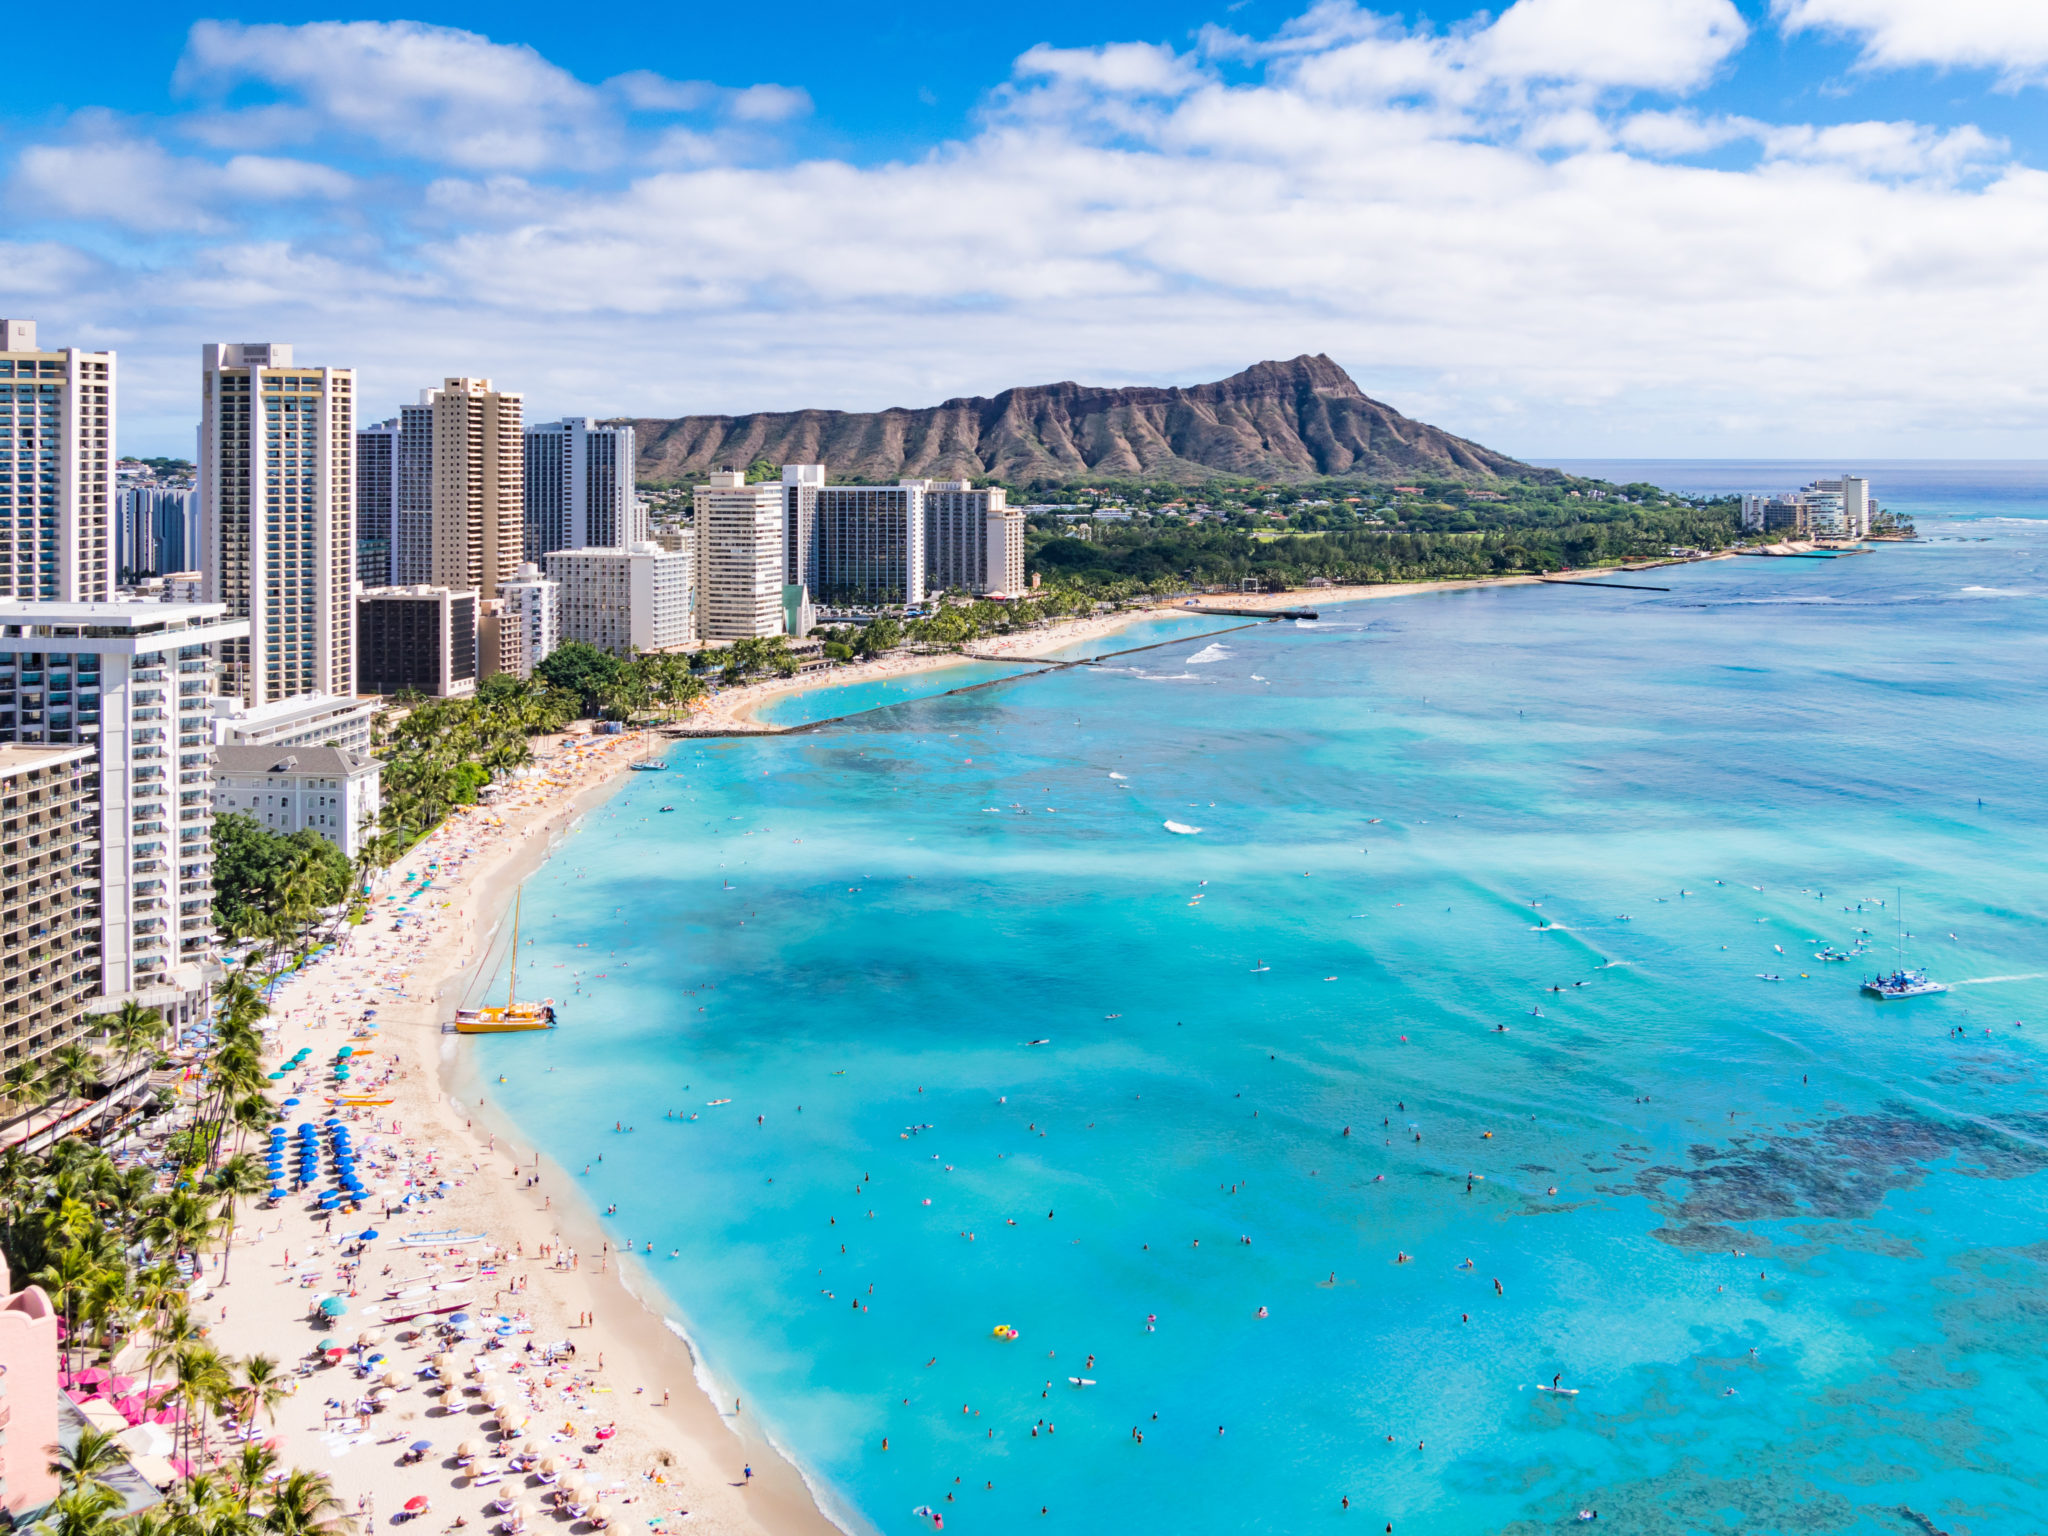 Waikiki Beach And Diamond Head Crater Including The Hotels And Buildings In Waikiki Honolulu